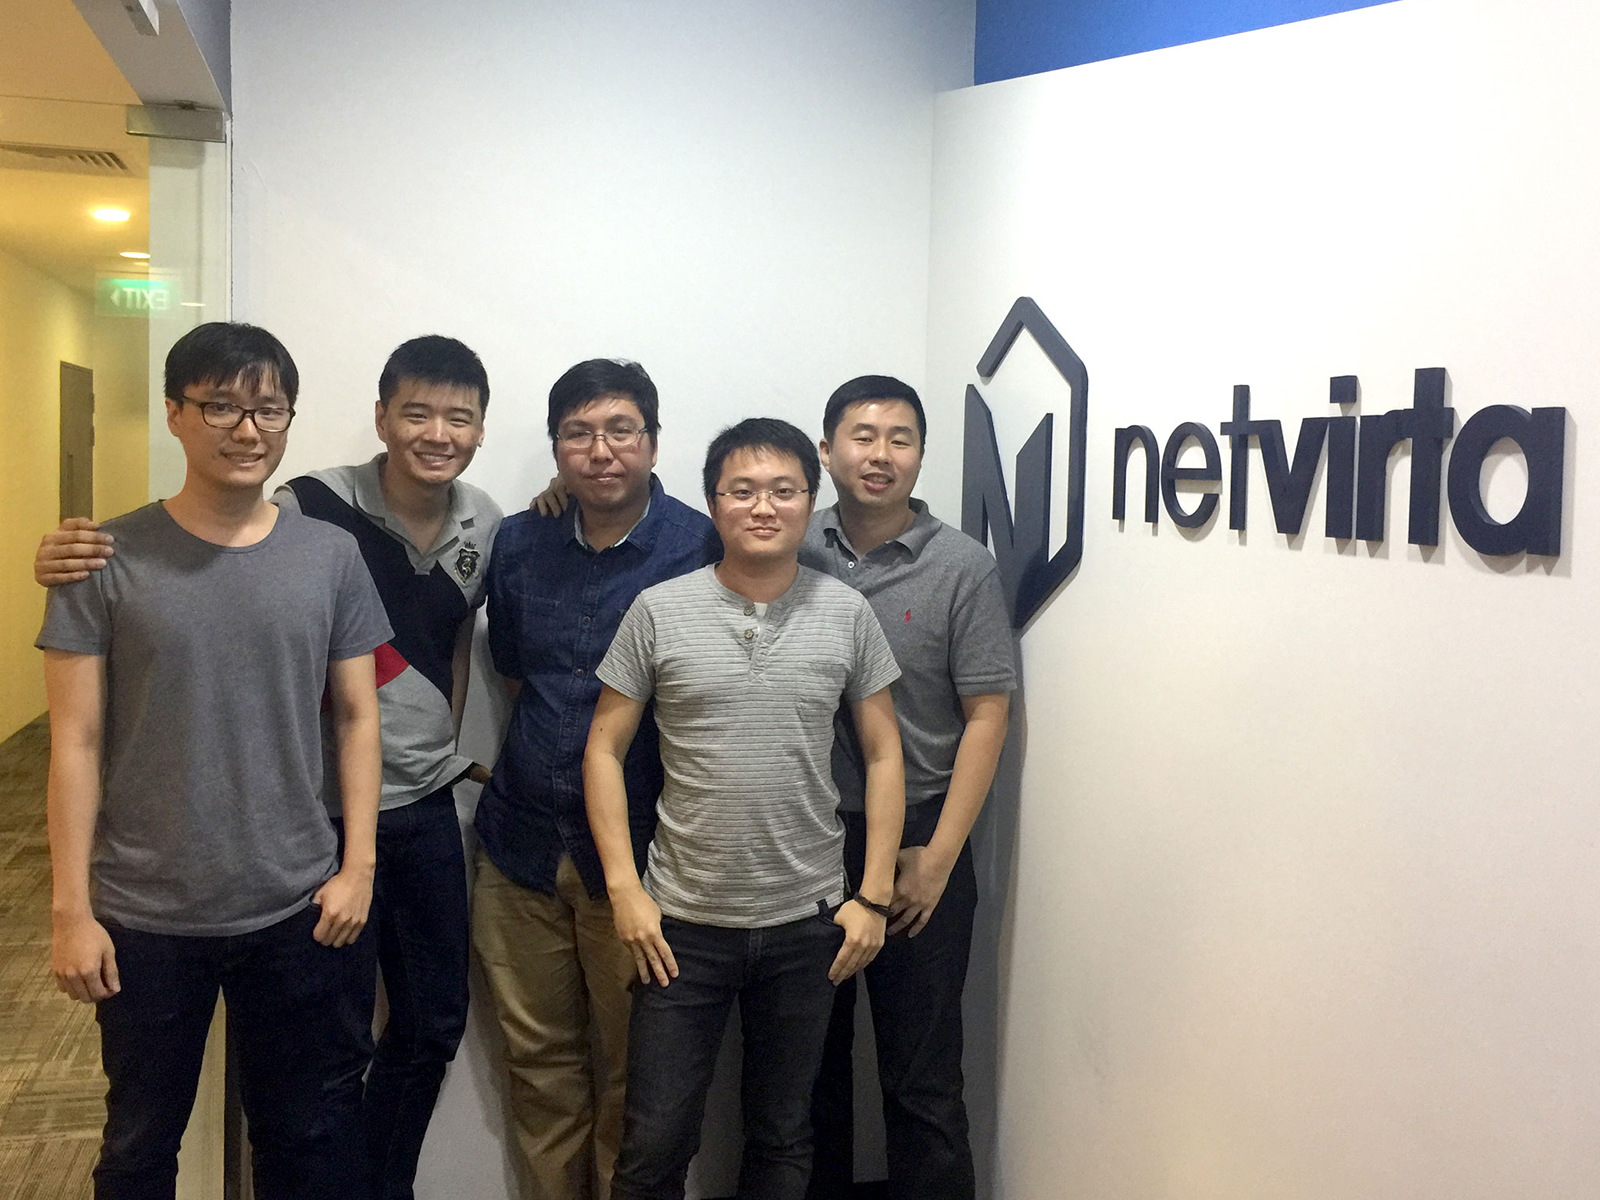 A group of DigiPen Singapore alumni pose next to the logo of Boston-based startup company NetVirta